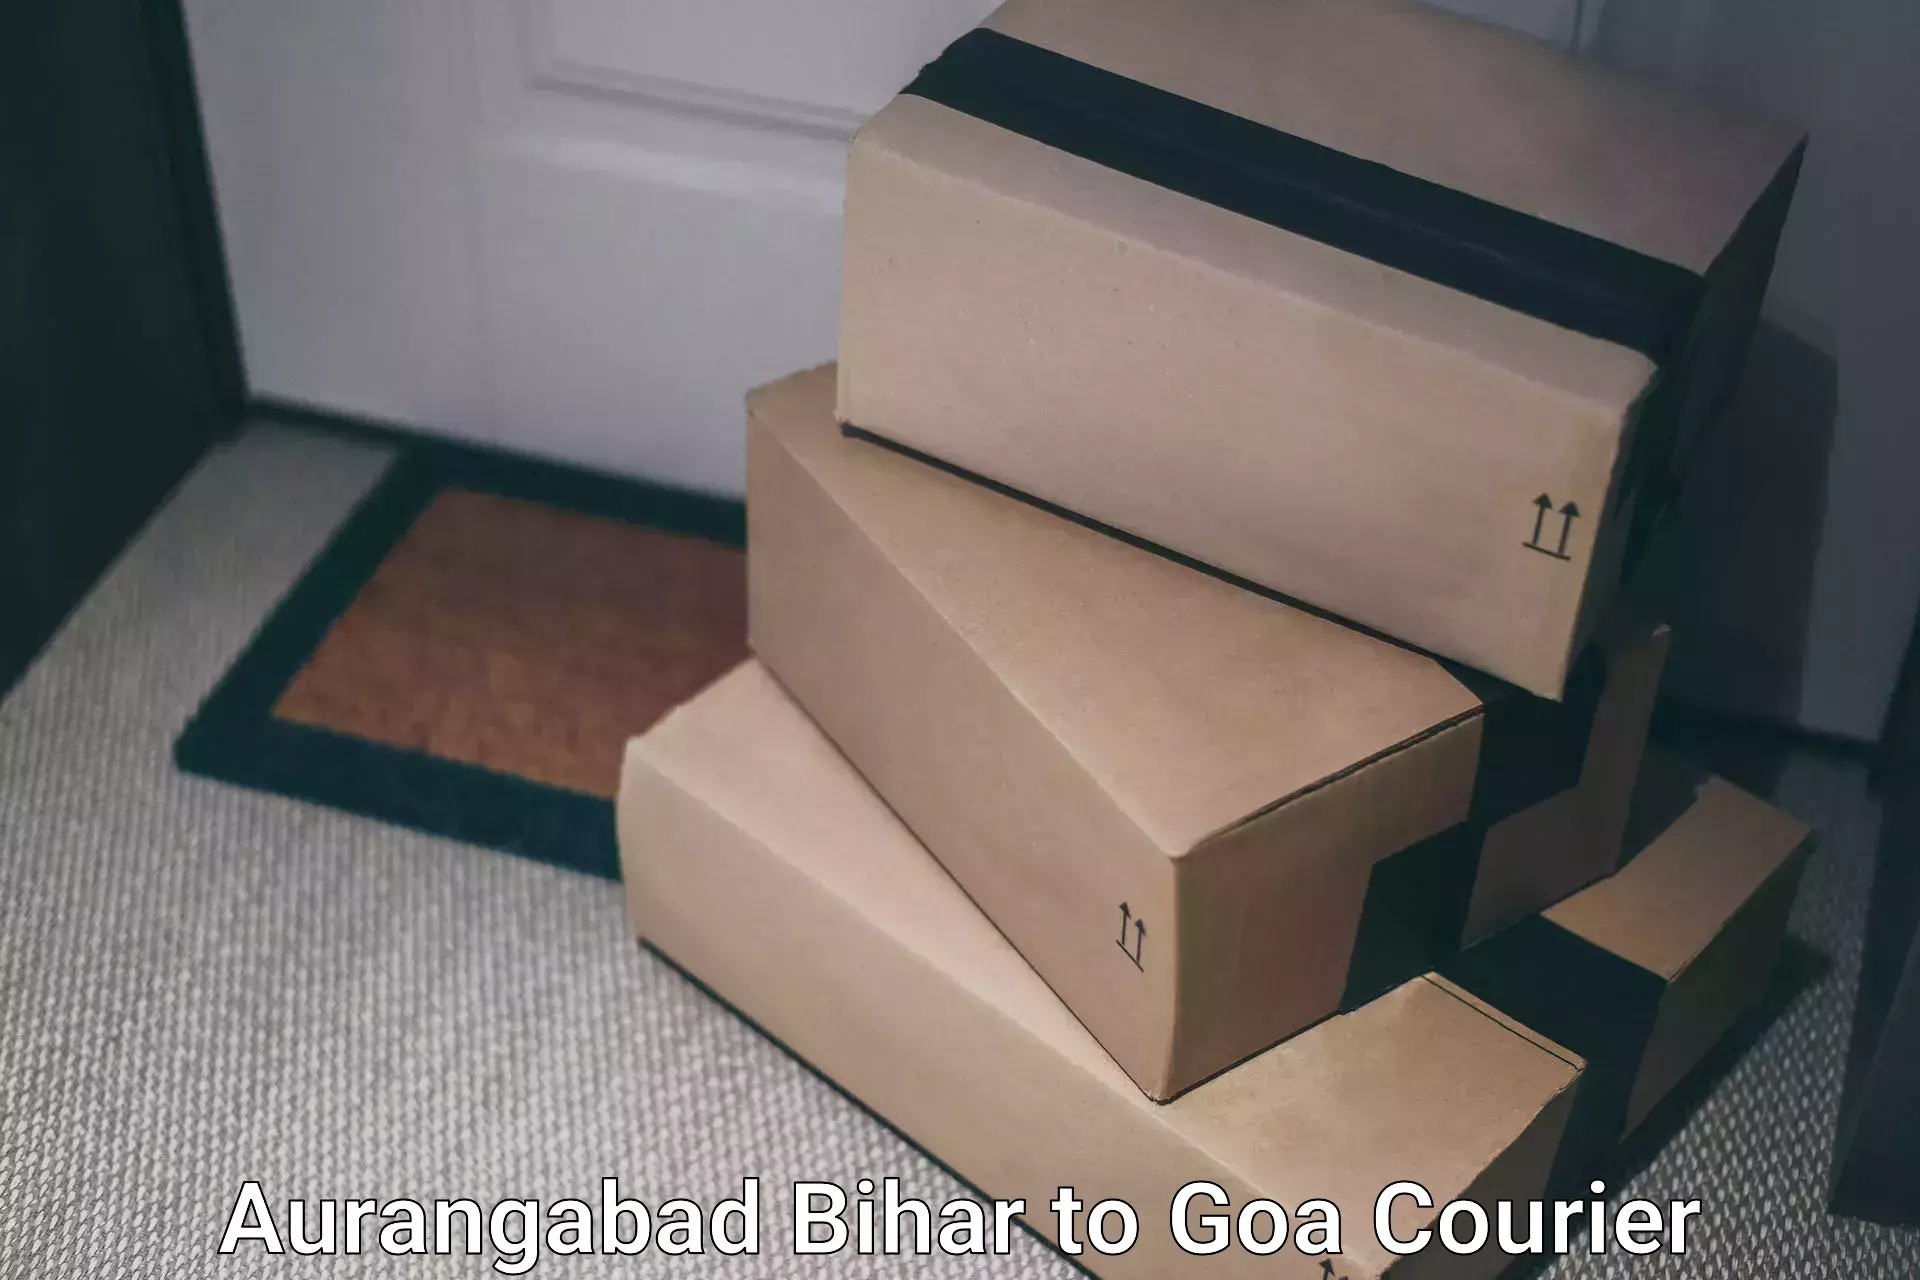 Package delivery network Aurangabad Bihar to Ponda